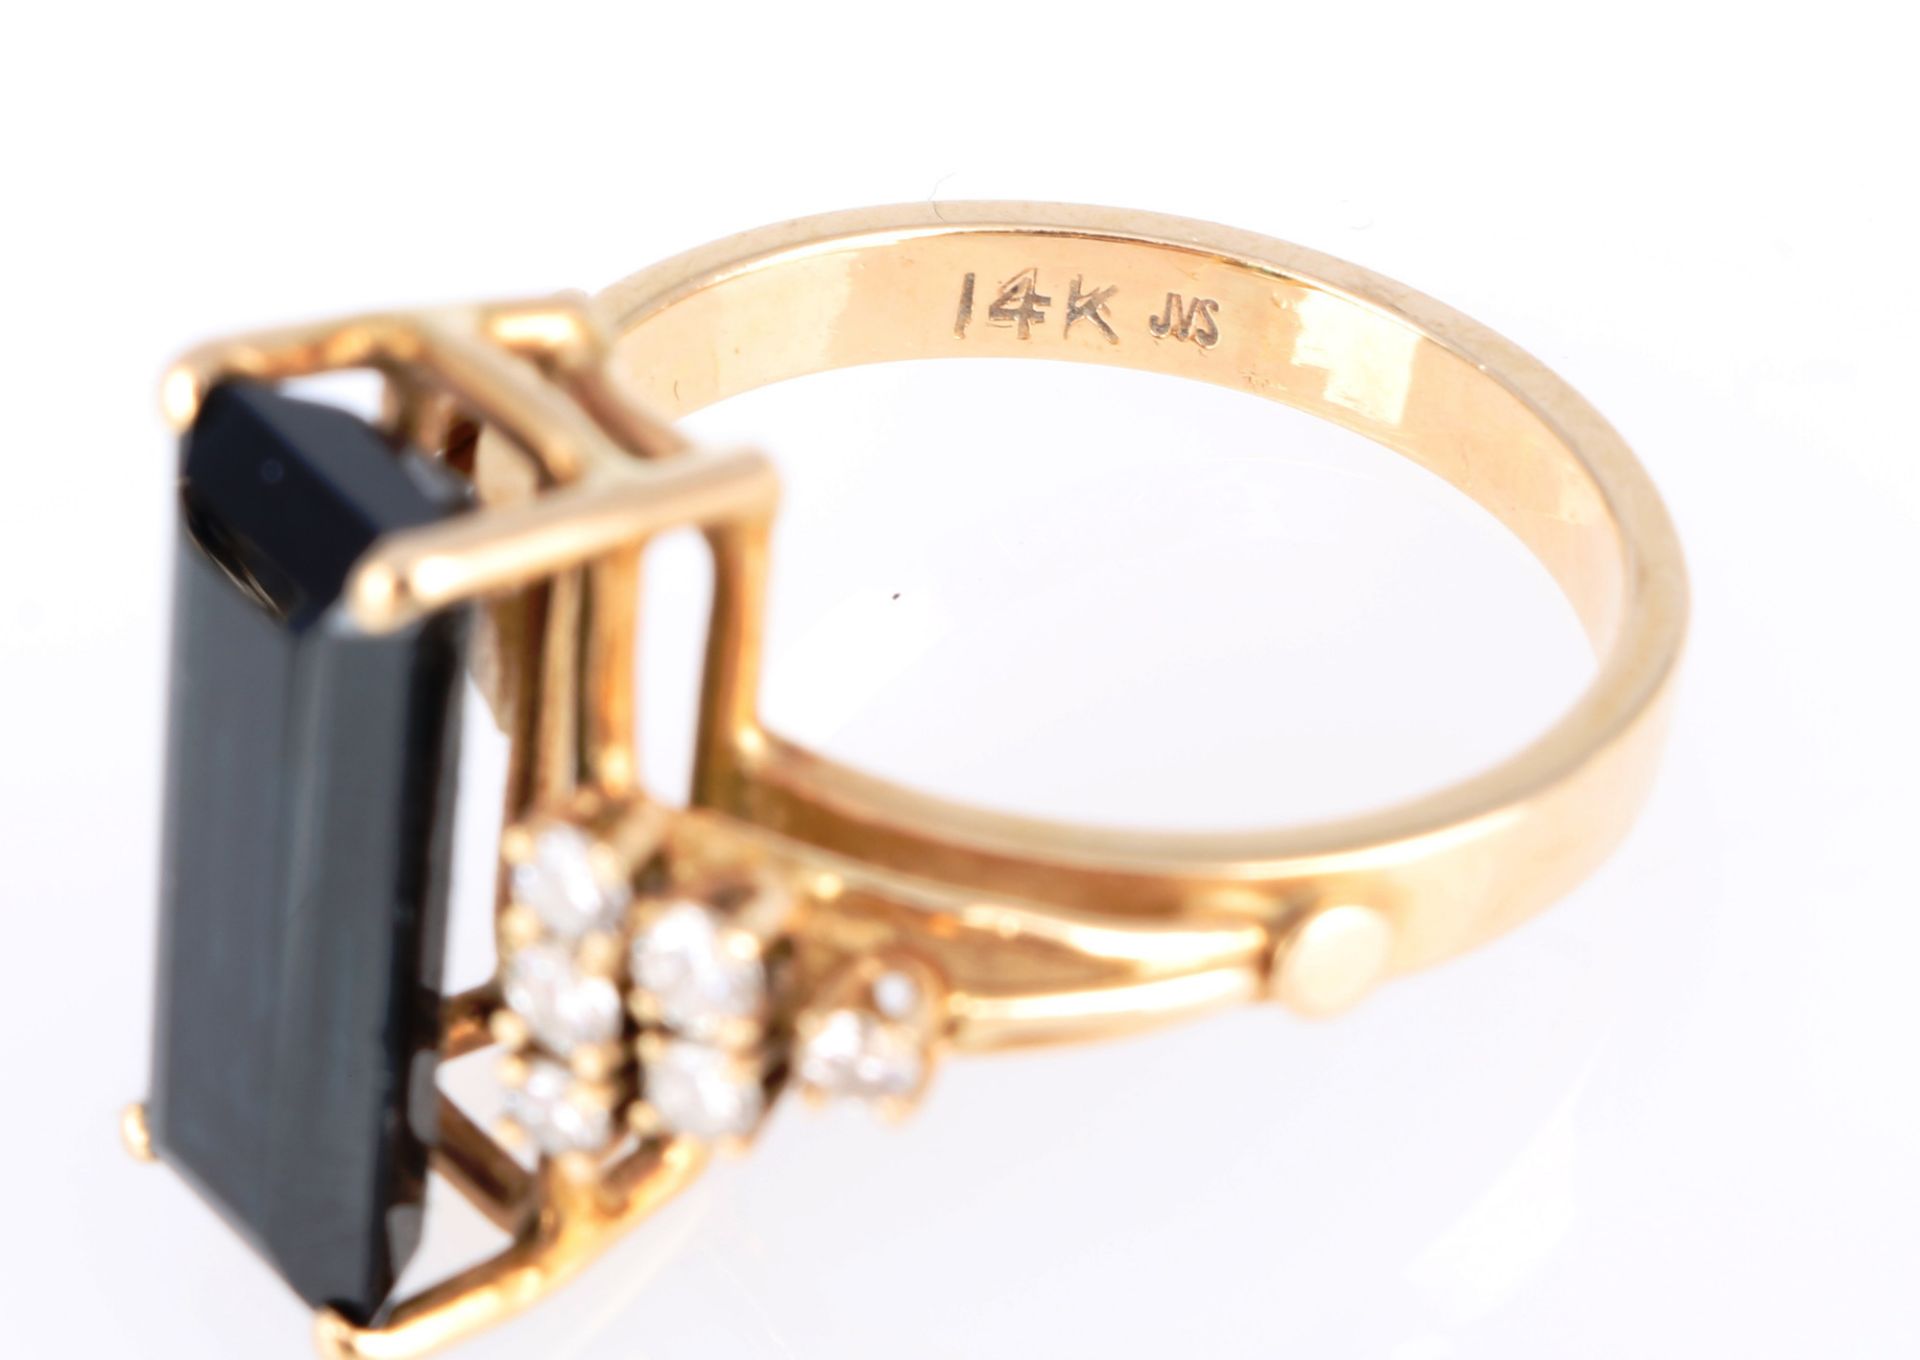 750 gold jewelry set with tourmaline and diamonds, - Image 5 of 5